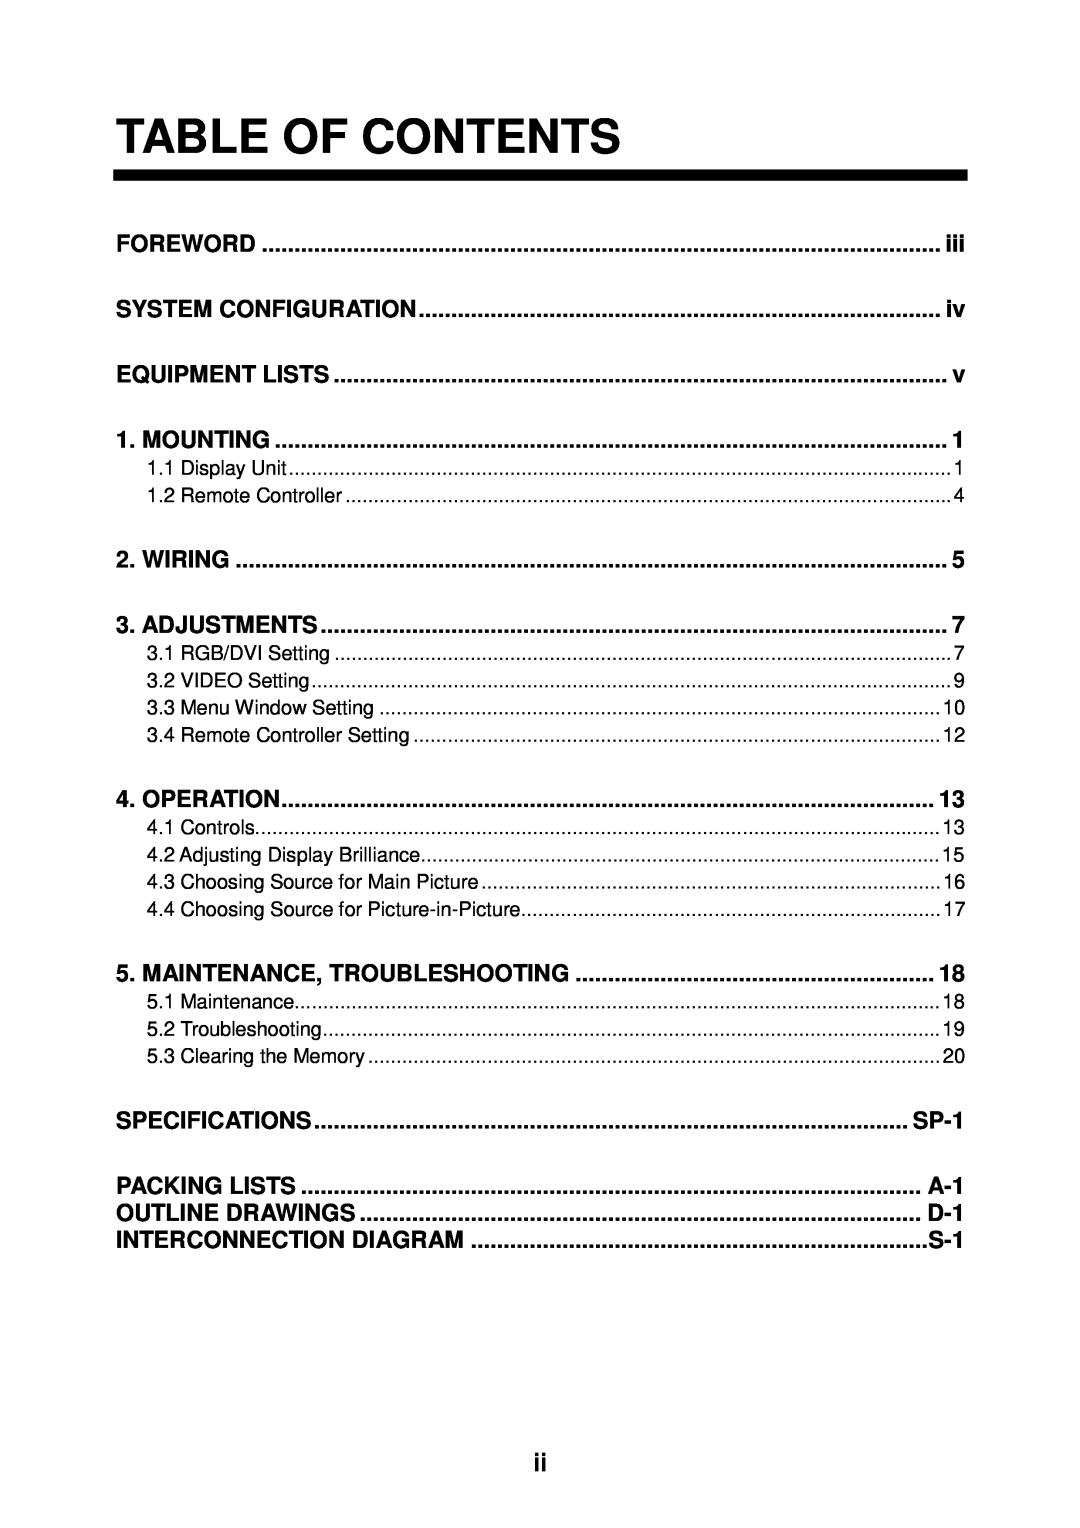 Furuno MU-155C manual Table Of Contents, SP-1 